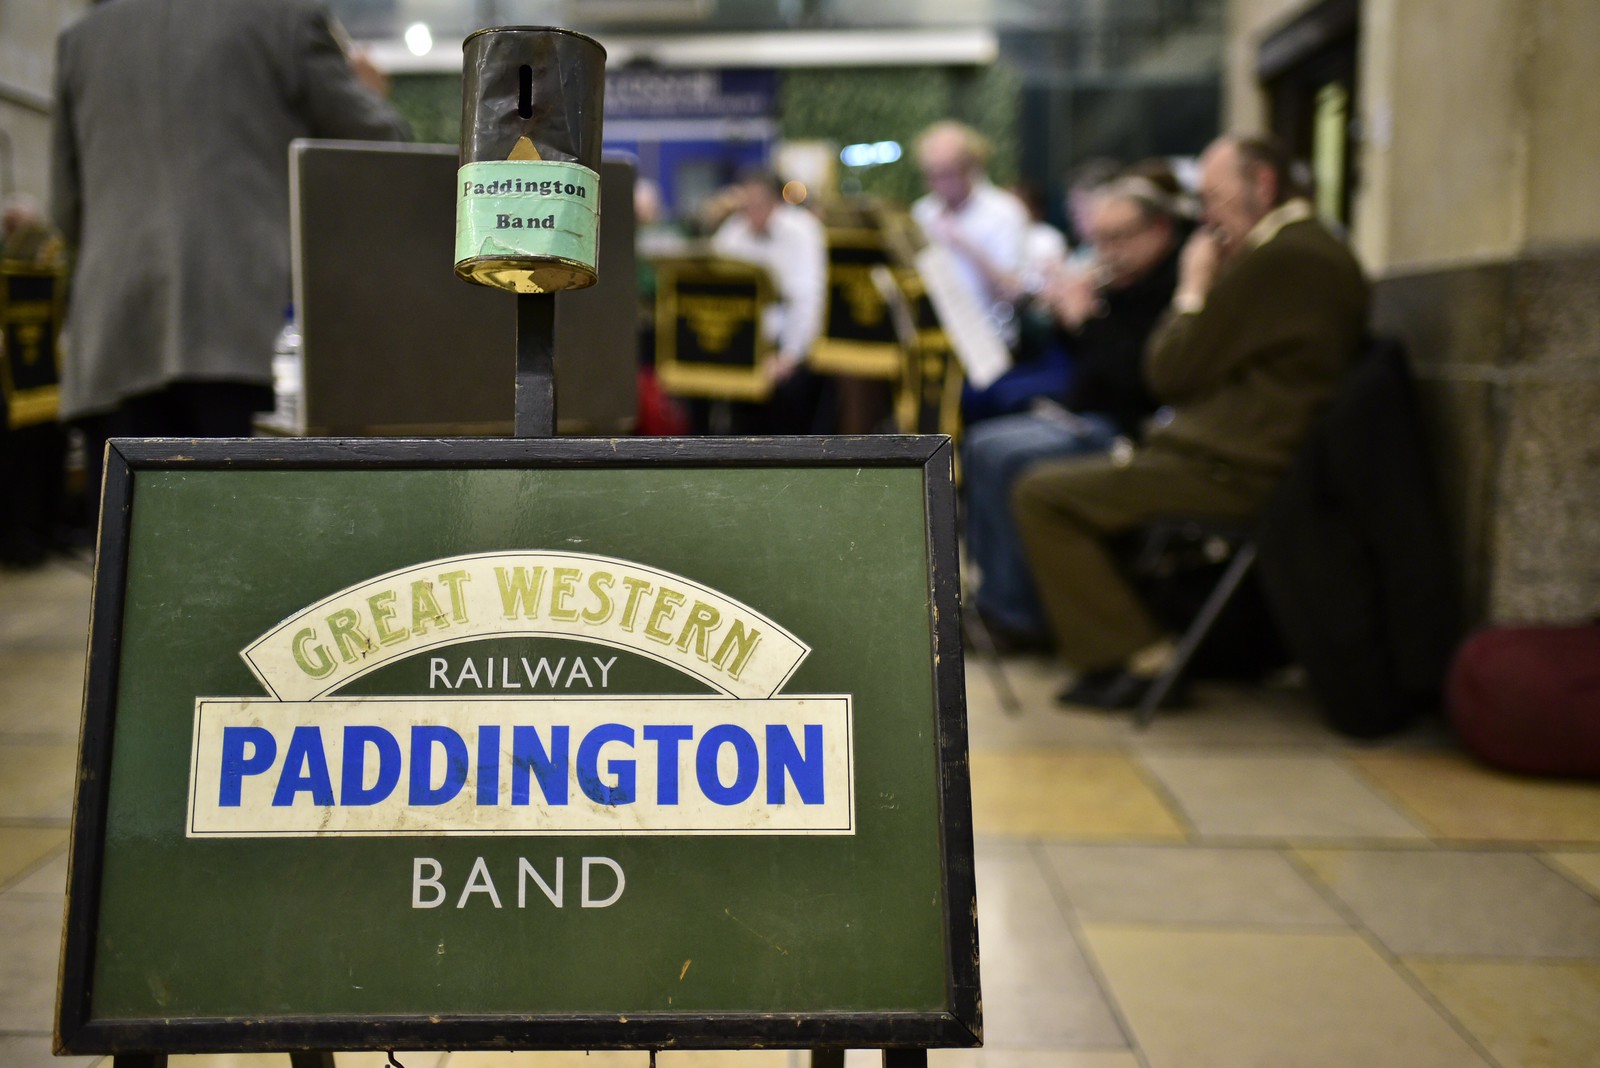 Paddington Band